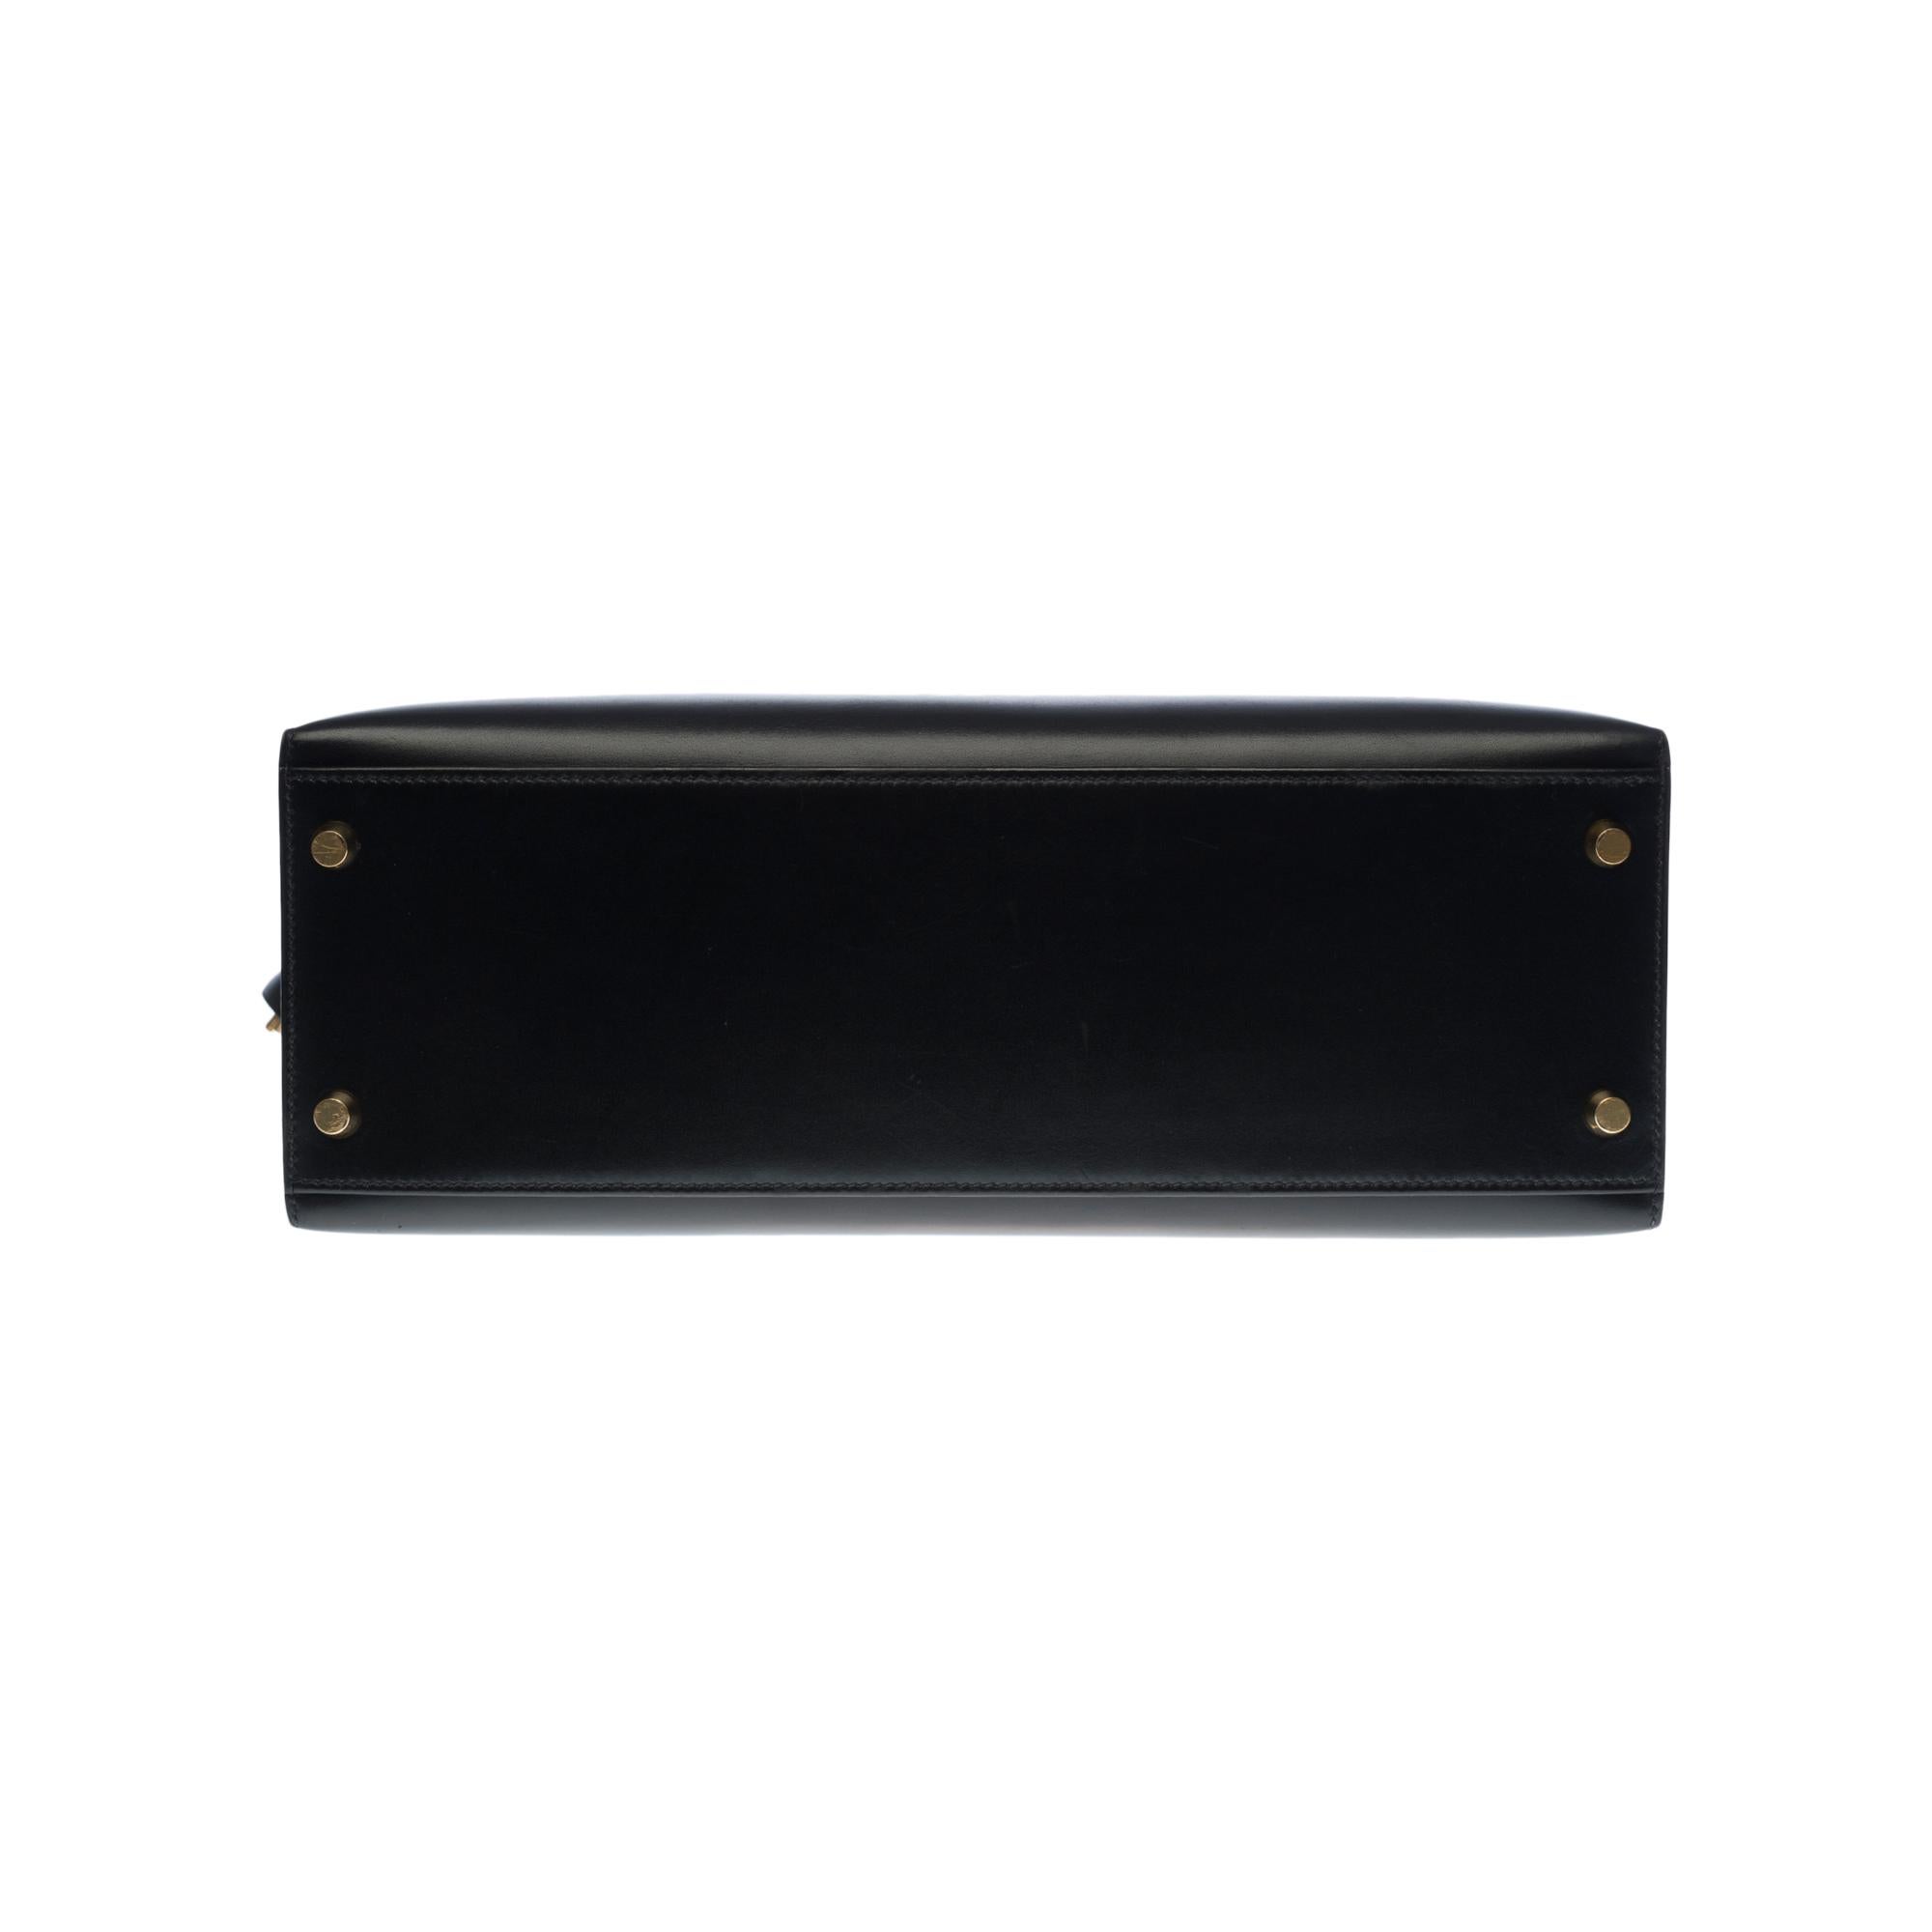 Hermès Kelly 32 handbag with strap in black box calfskin leather, GHW 3